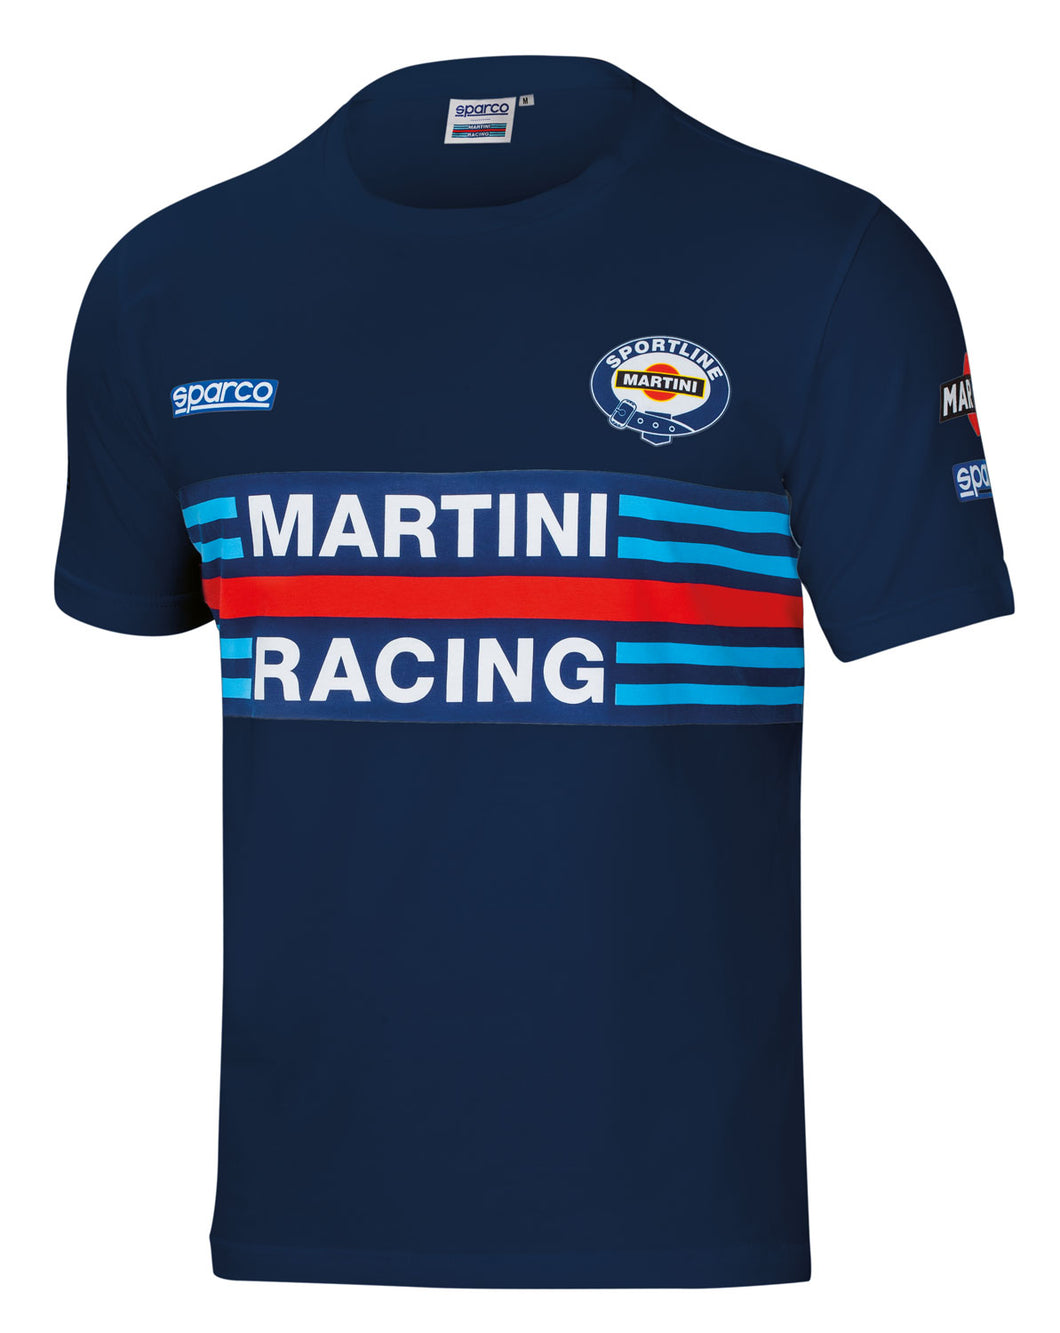 Sparco Martini Racing t-shirt